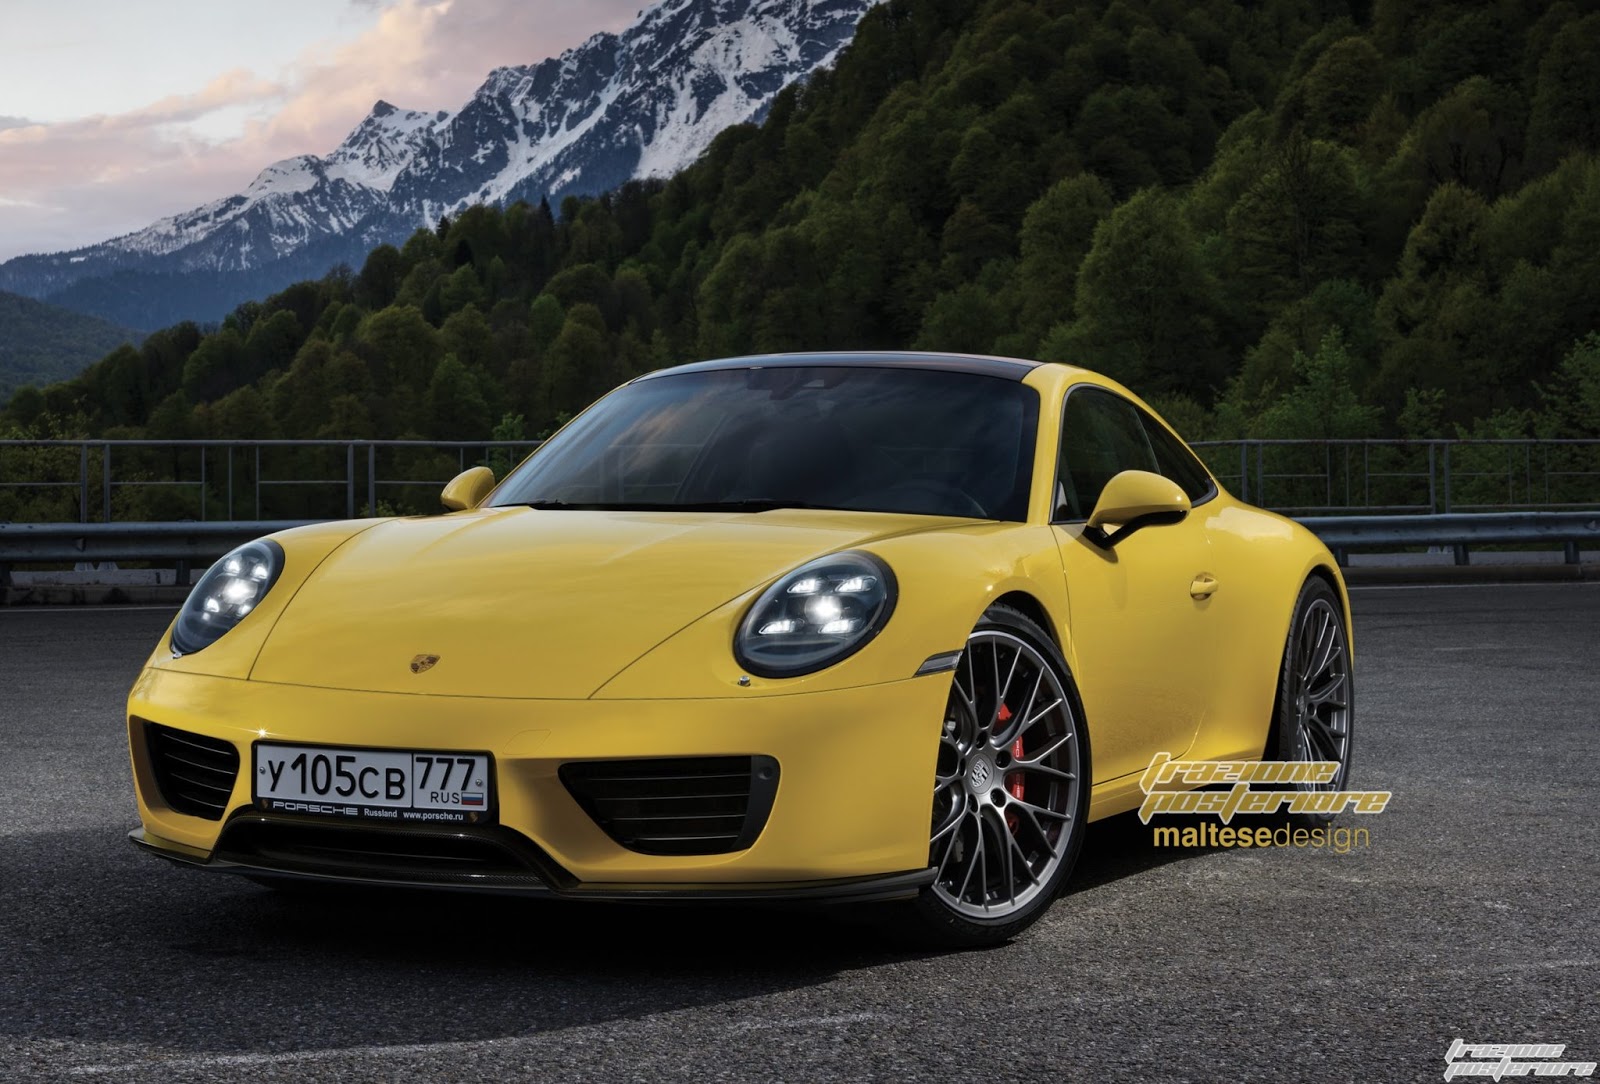 2019 Porsche 911 Imagined With Modern Design